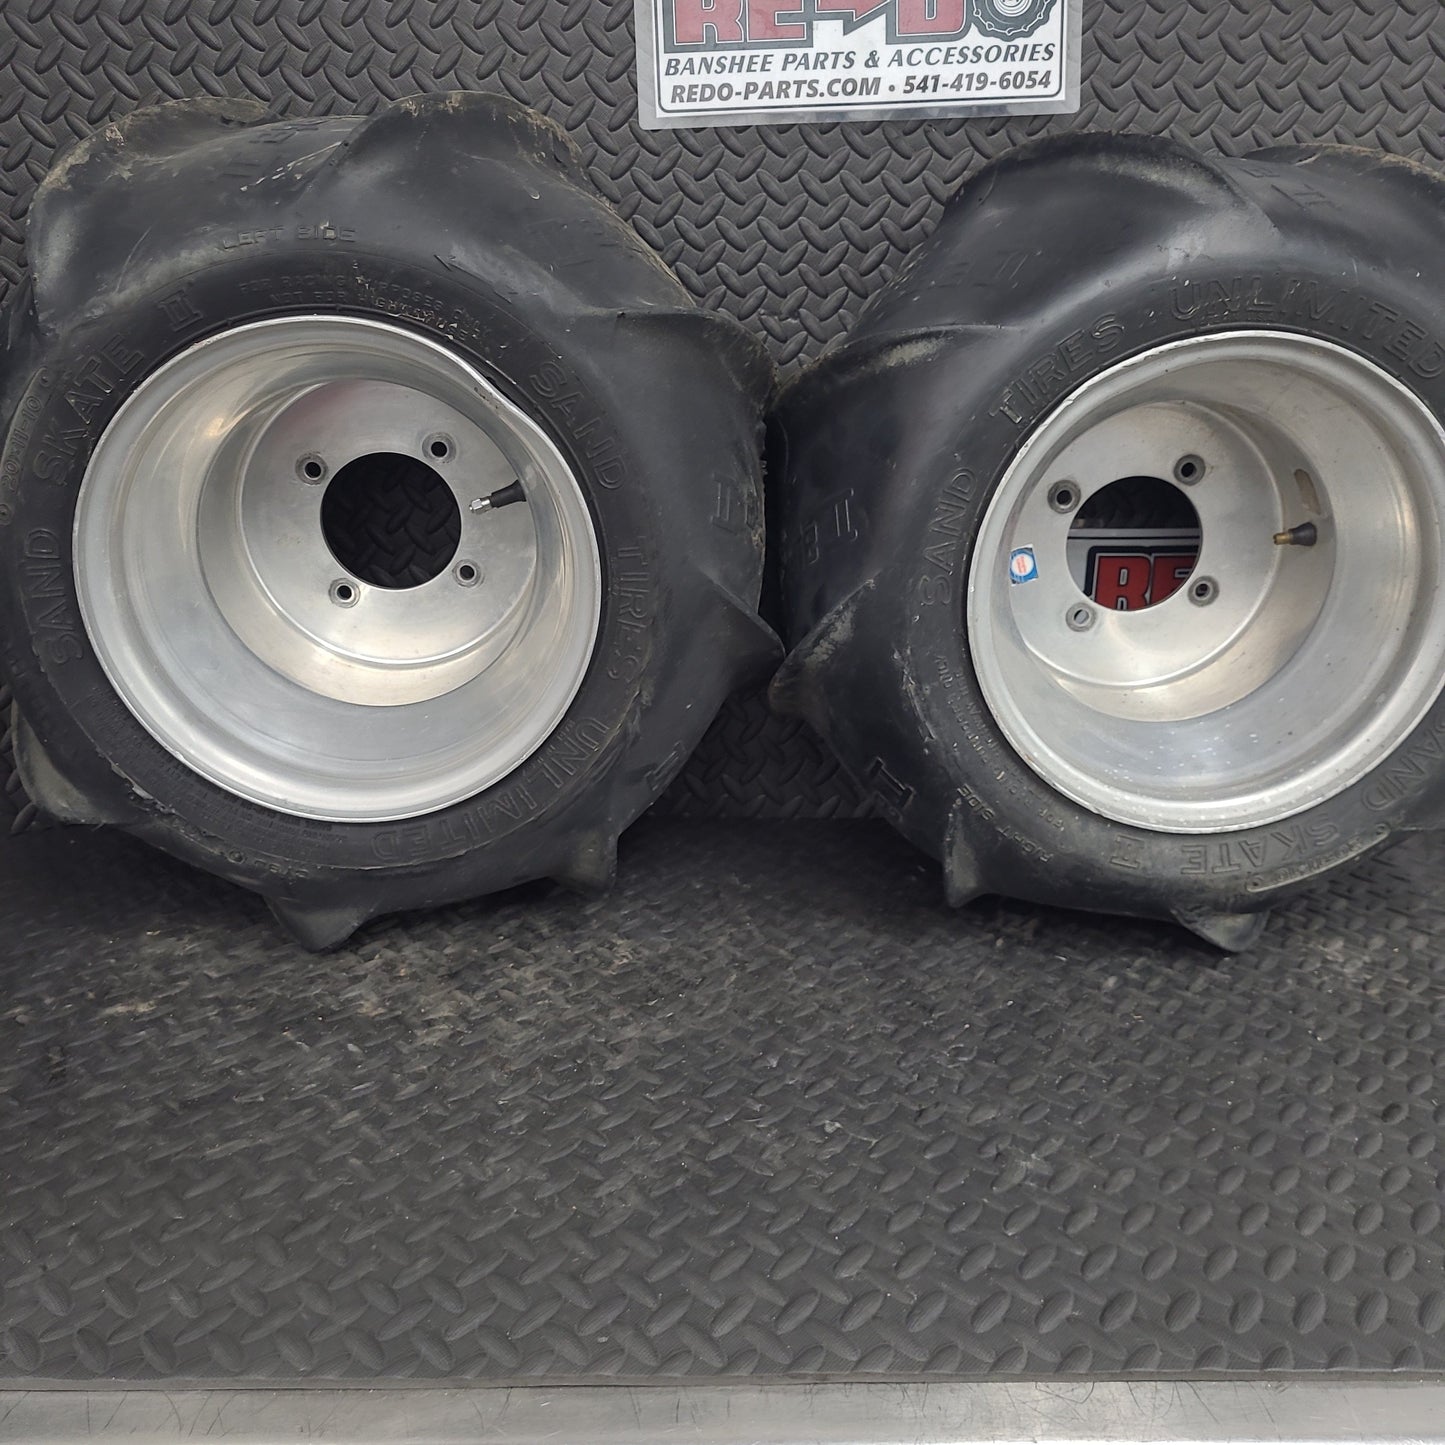 20x11-10 Rear Tires Sand Skate II on Douglas Blue Label *USED*